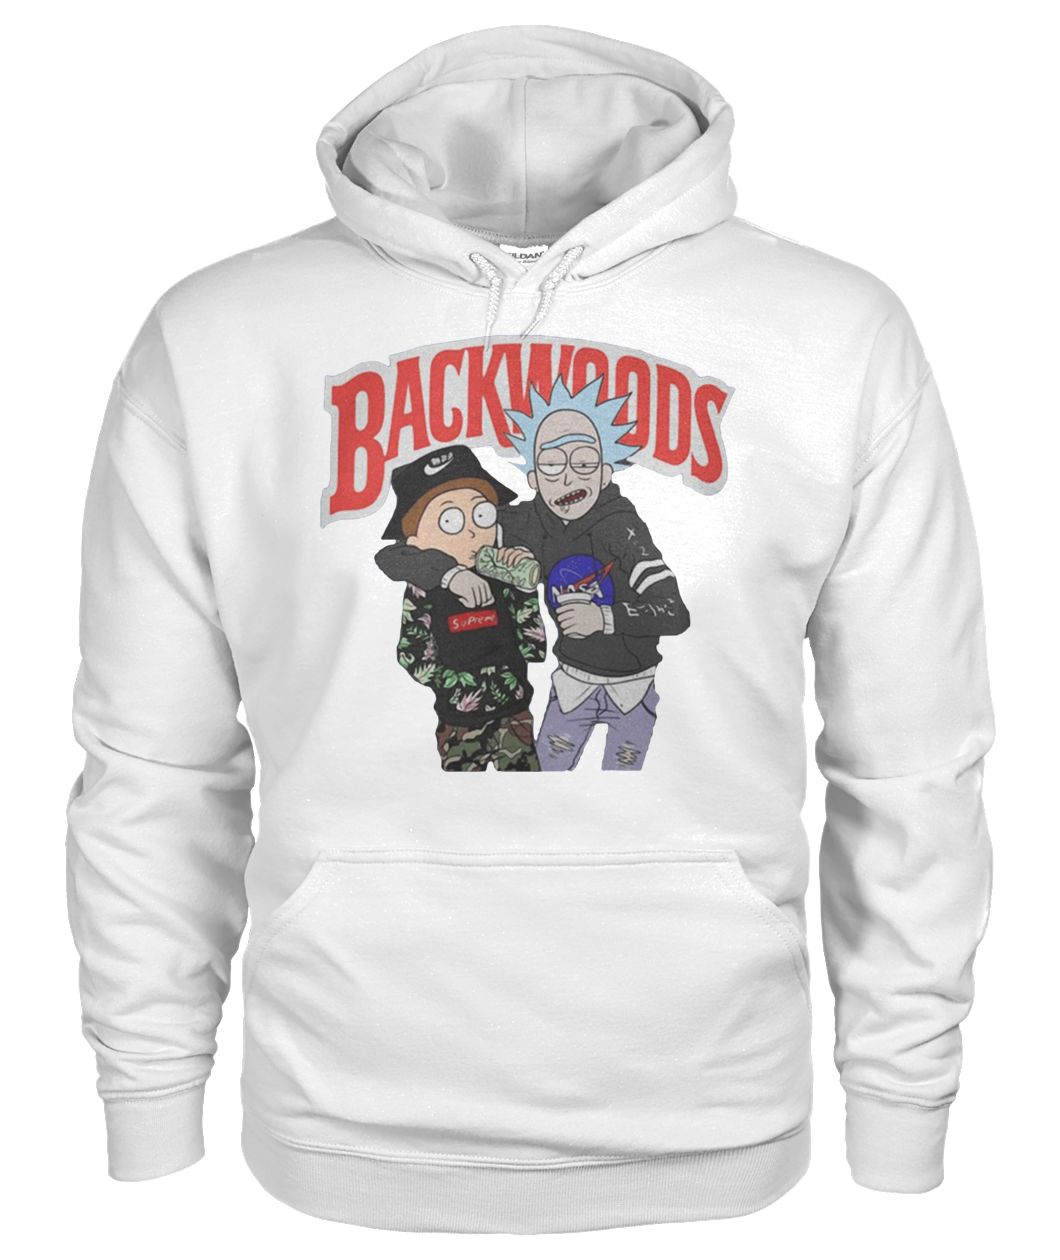 Rick and morty backwoods gildan hoodie